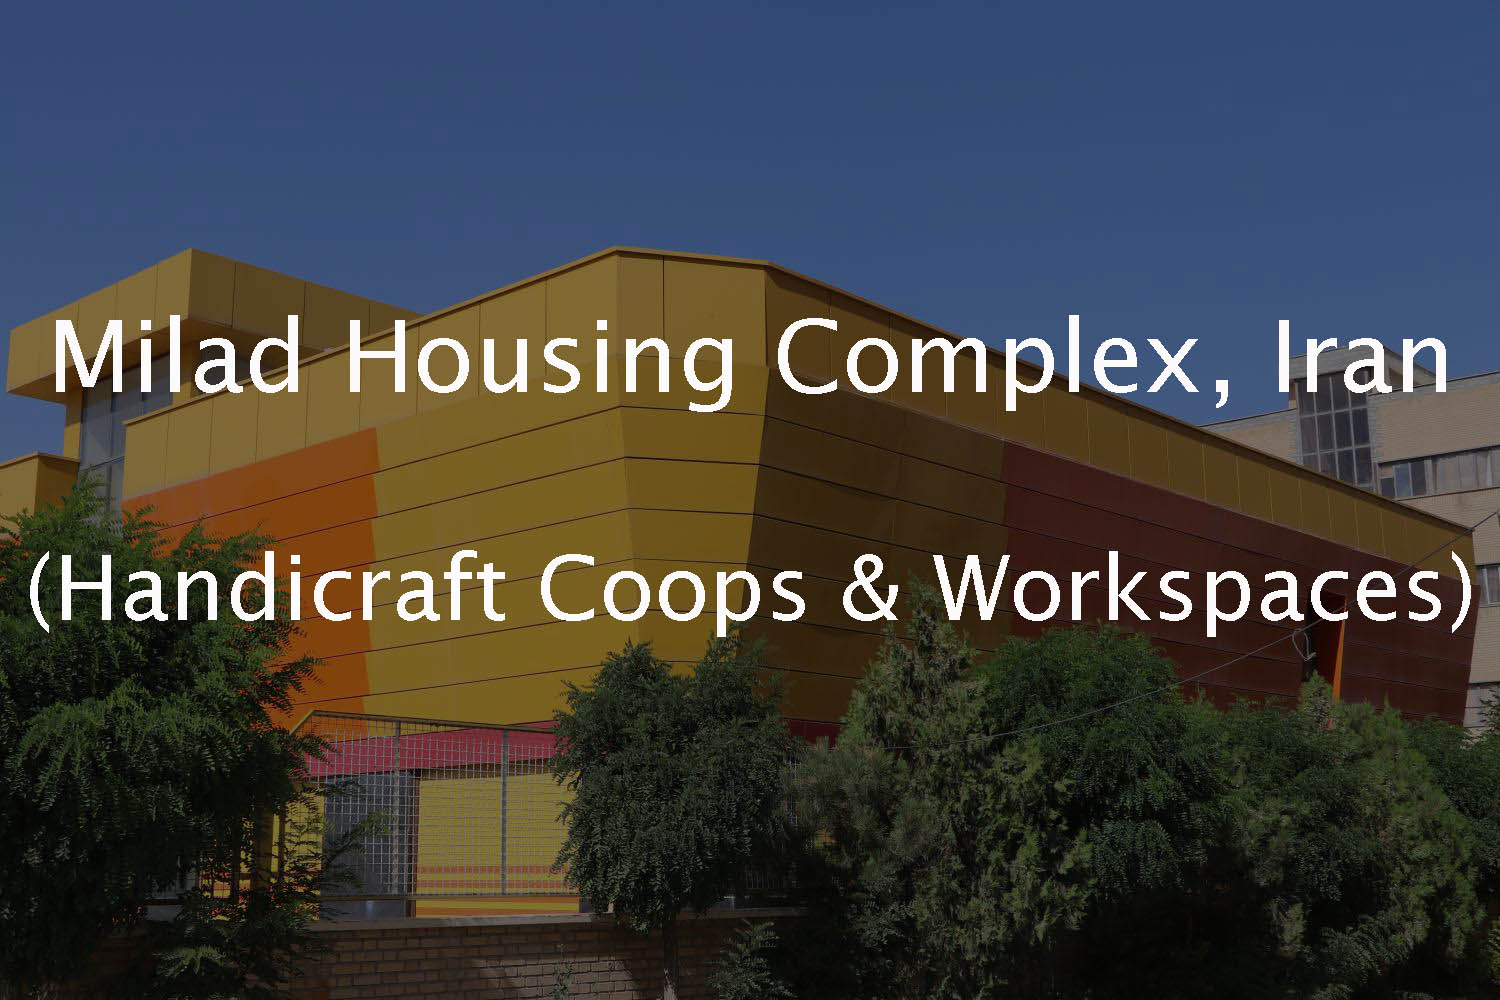 Milad Housing Complex (Handicraft Cooperatives & Workspaces Collection)